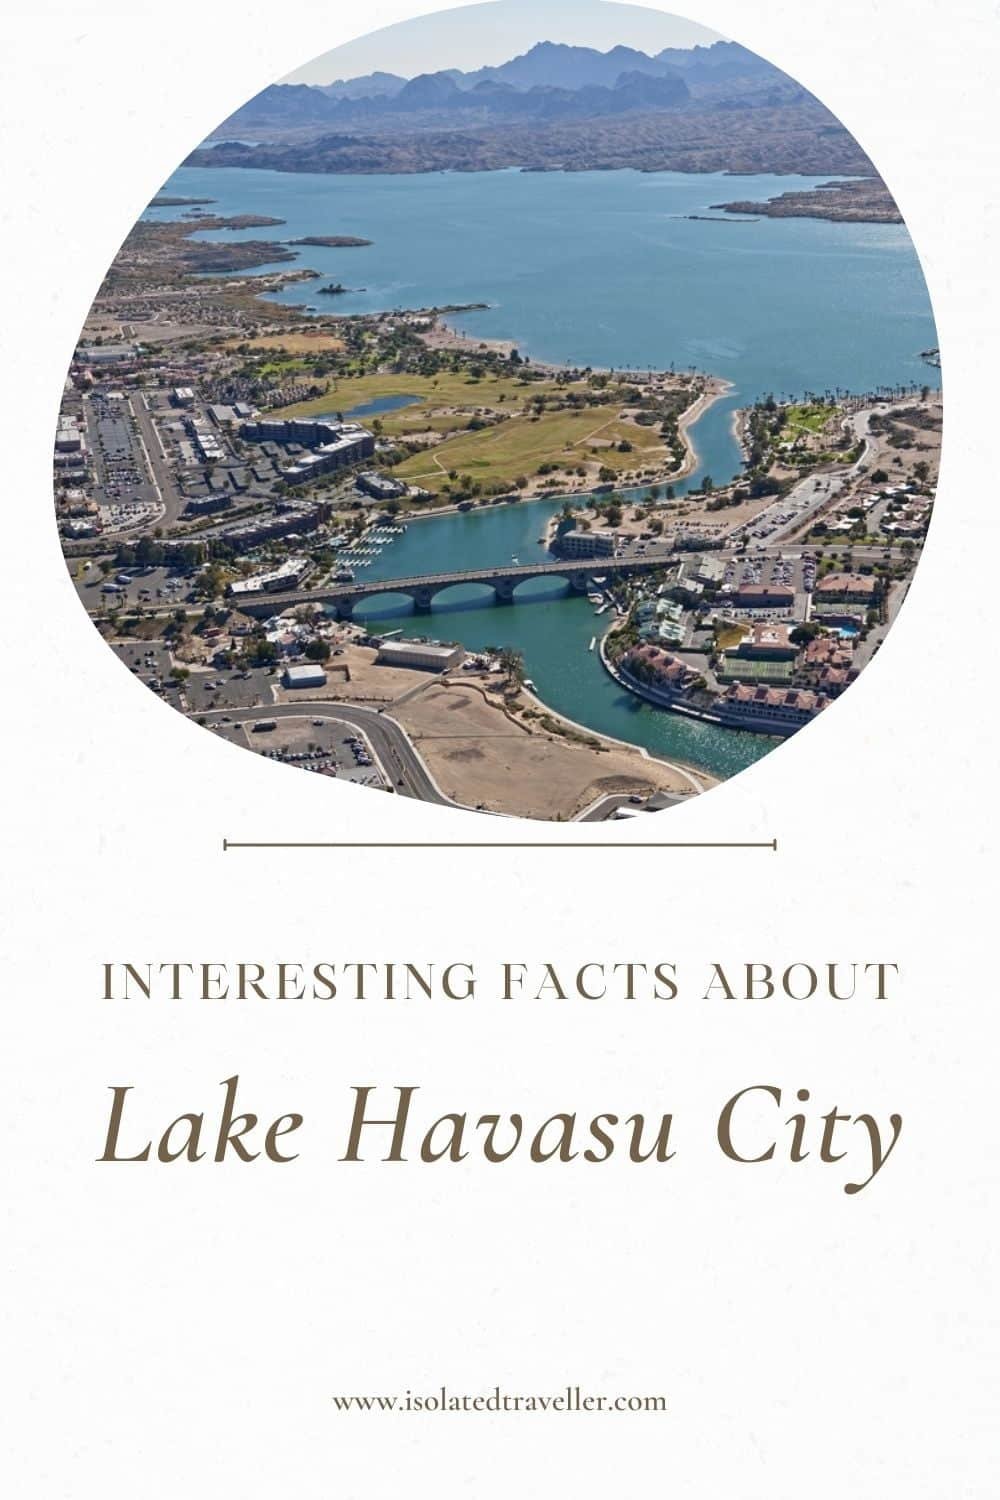 Facts About Lake Havasu City